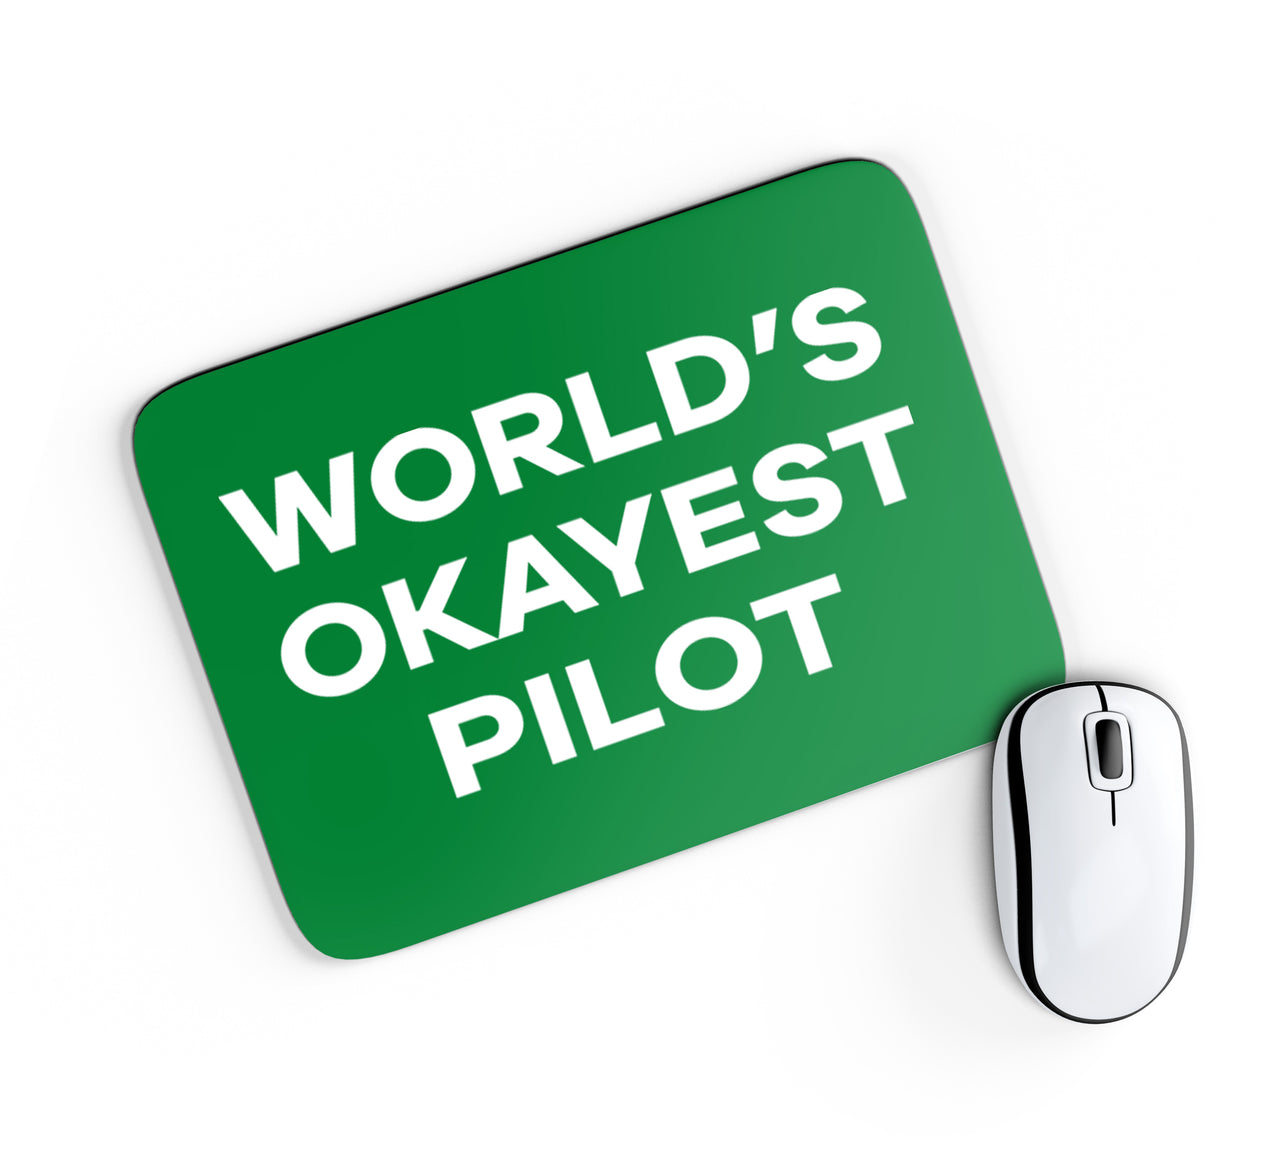 World's Okayest Pilot Designed Mouse Pads